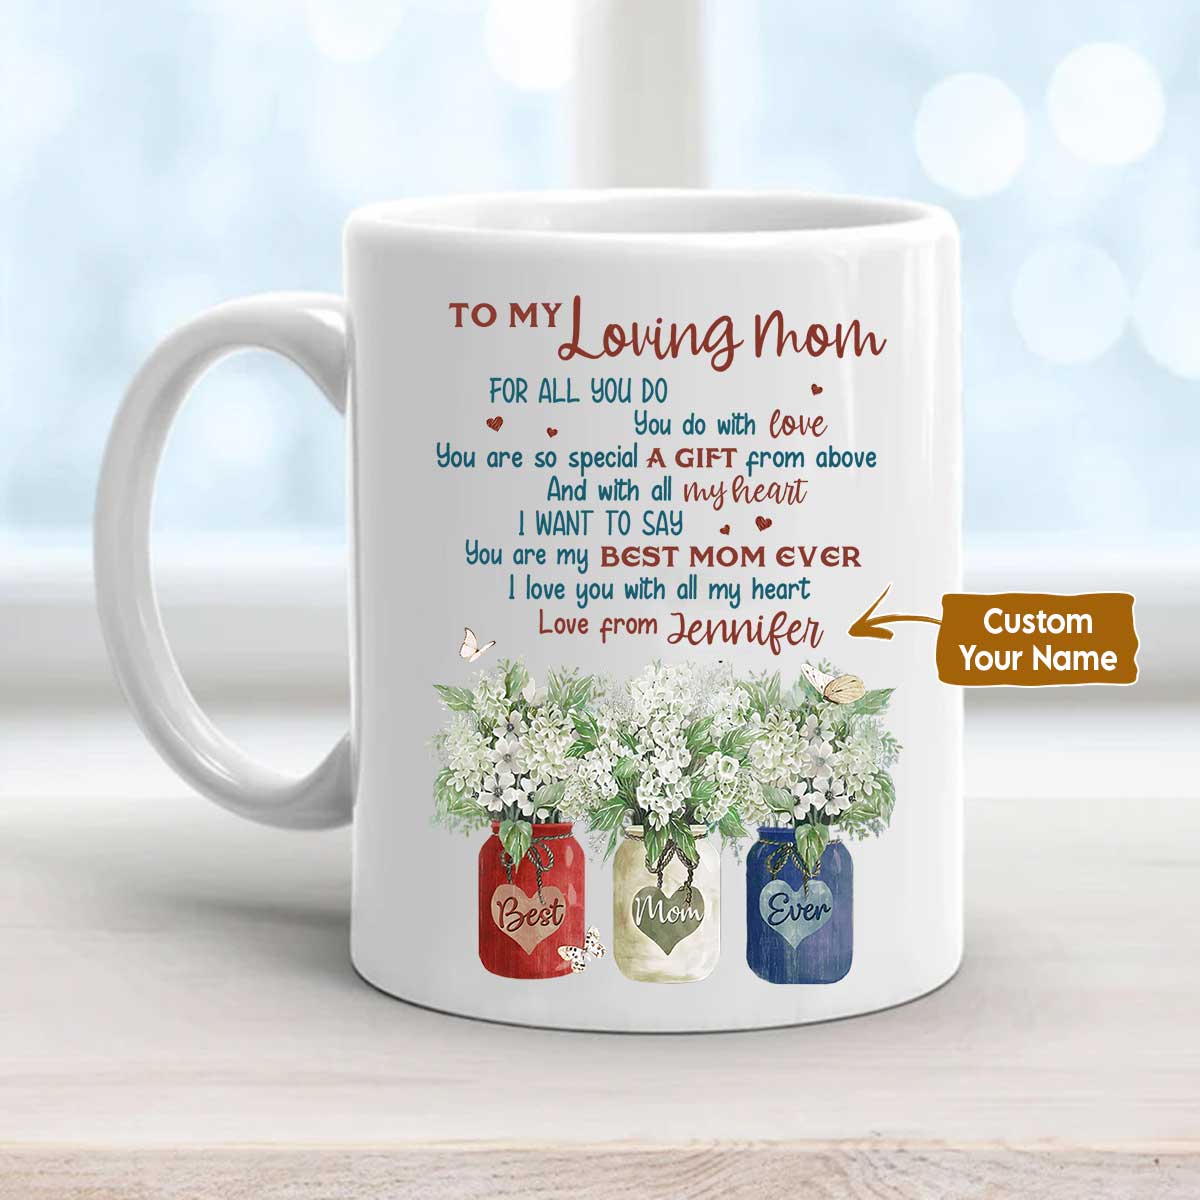 Gift For Mom Personalized Mug - Daughter to mom, White flower garden, Butterfly Mug - Custom Gift For Mother's Day, Presents for Mom - I love you Mug